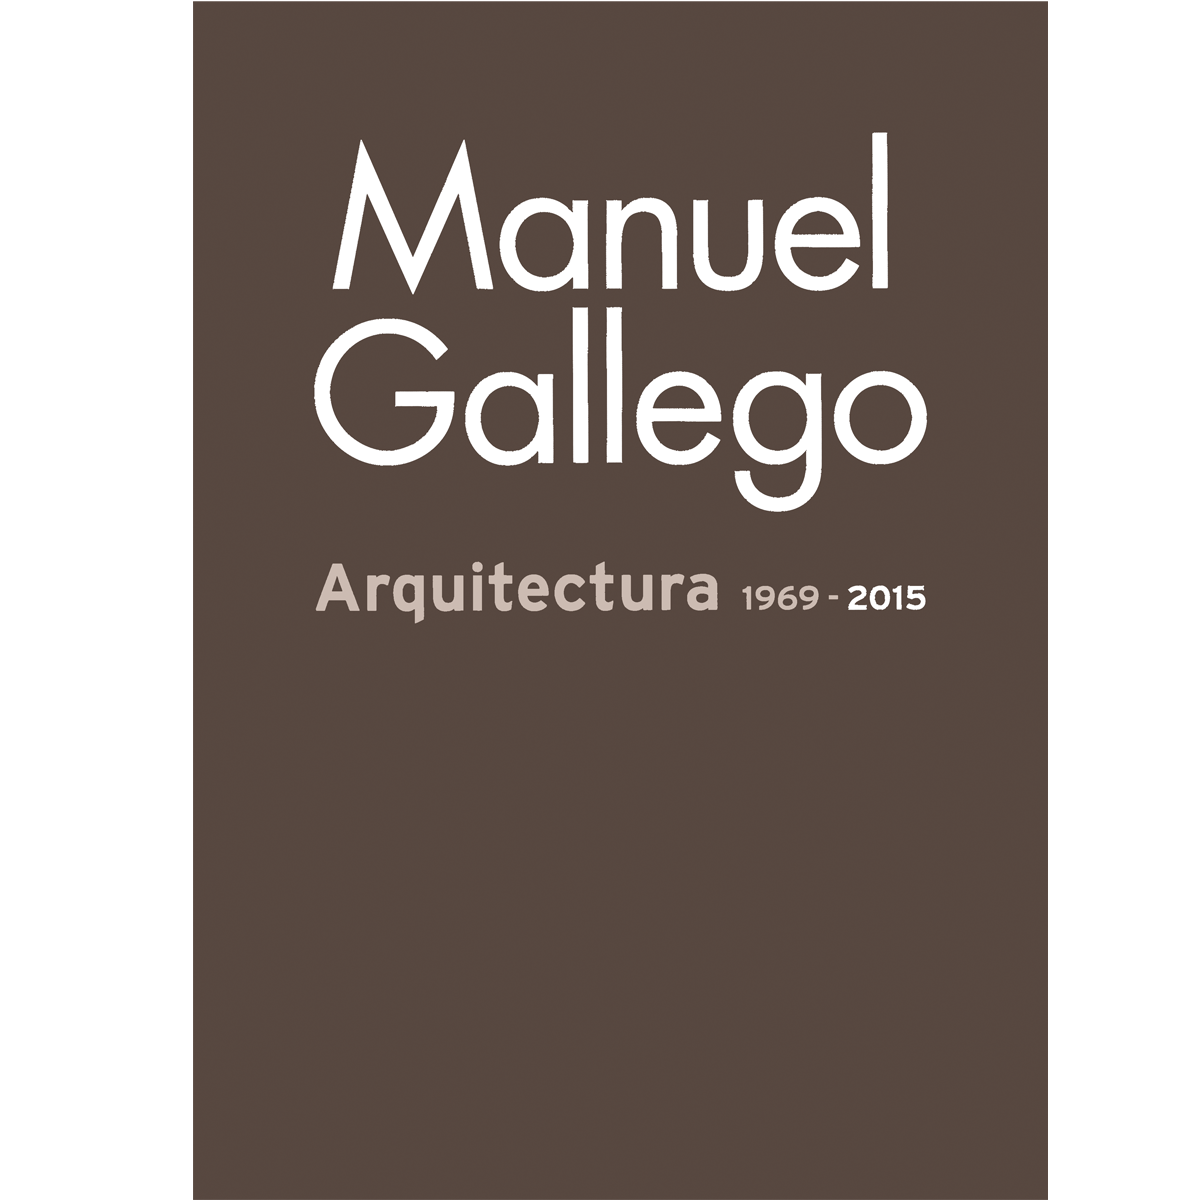 Manuel Gallego